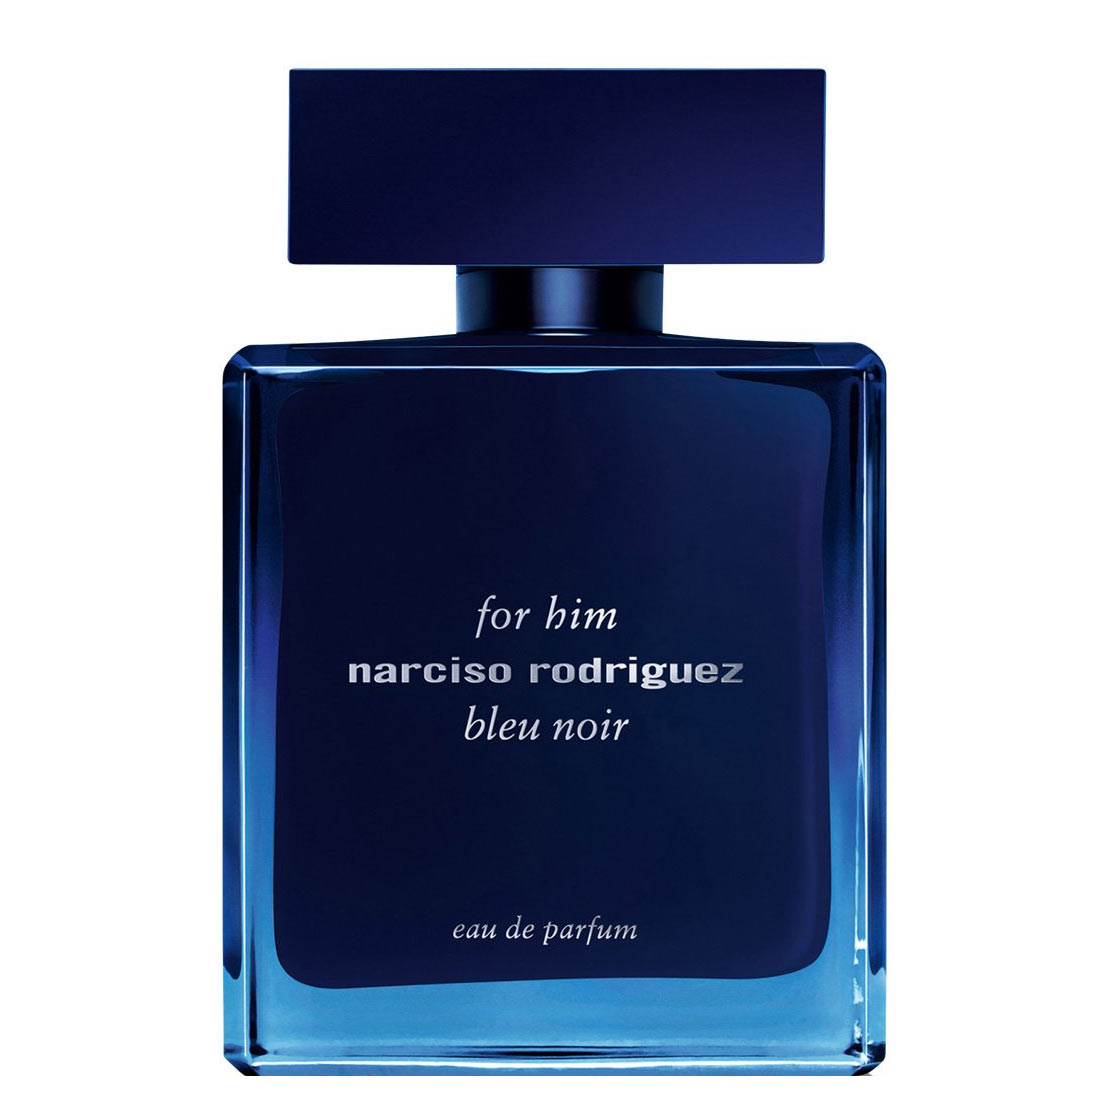 Narciso Rodriguez for Him Bleu Noir Eau de Parfum Narciso Rodriguez Image